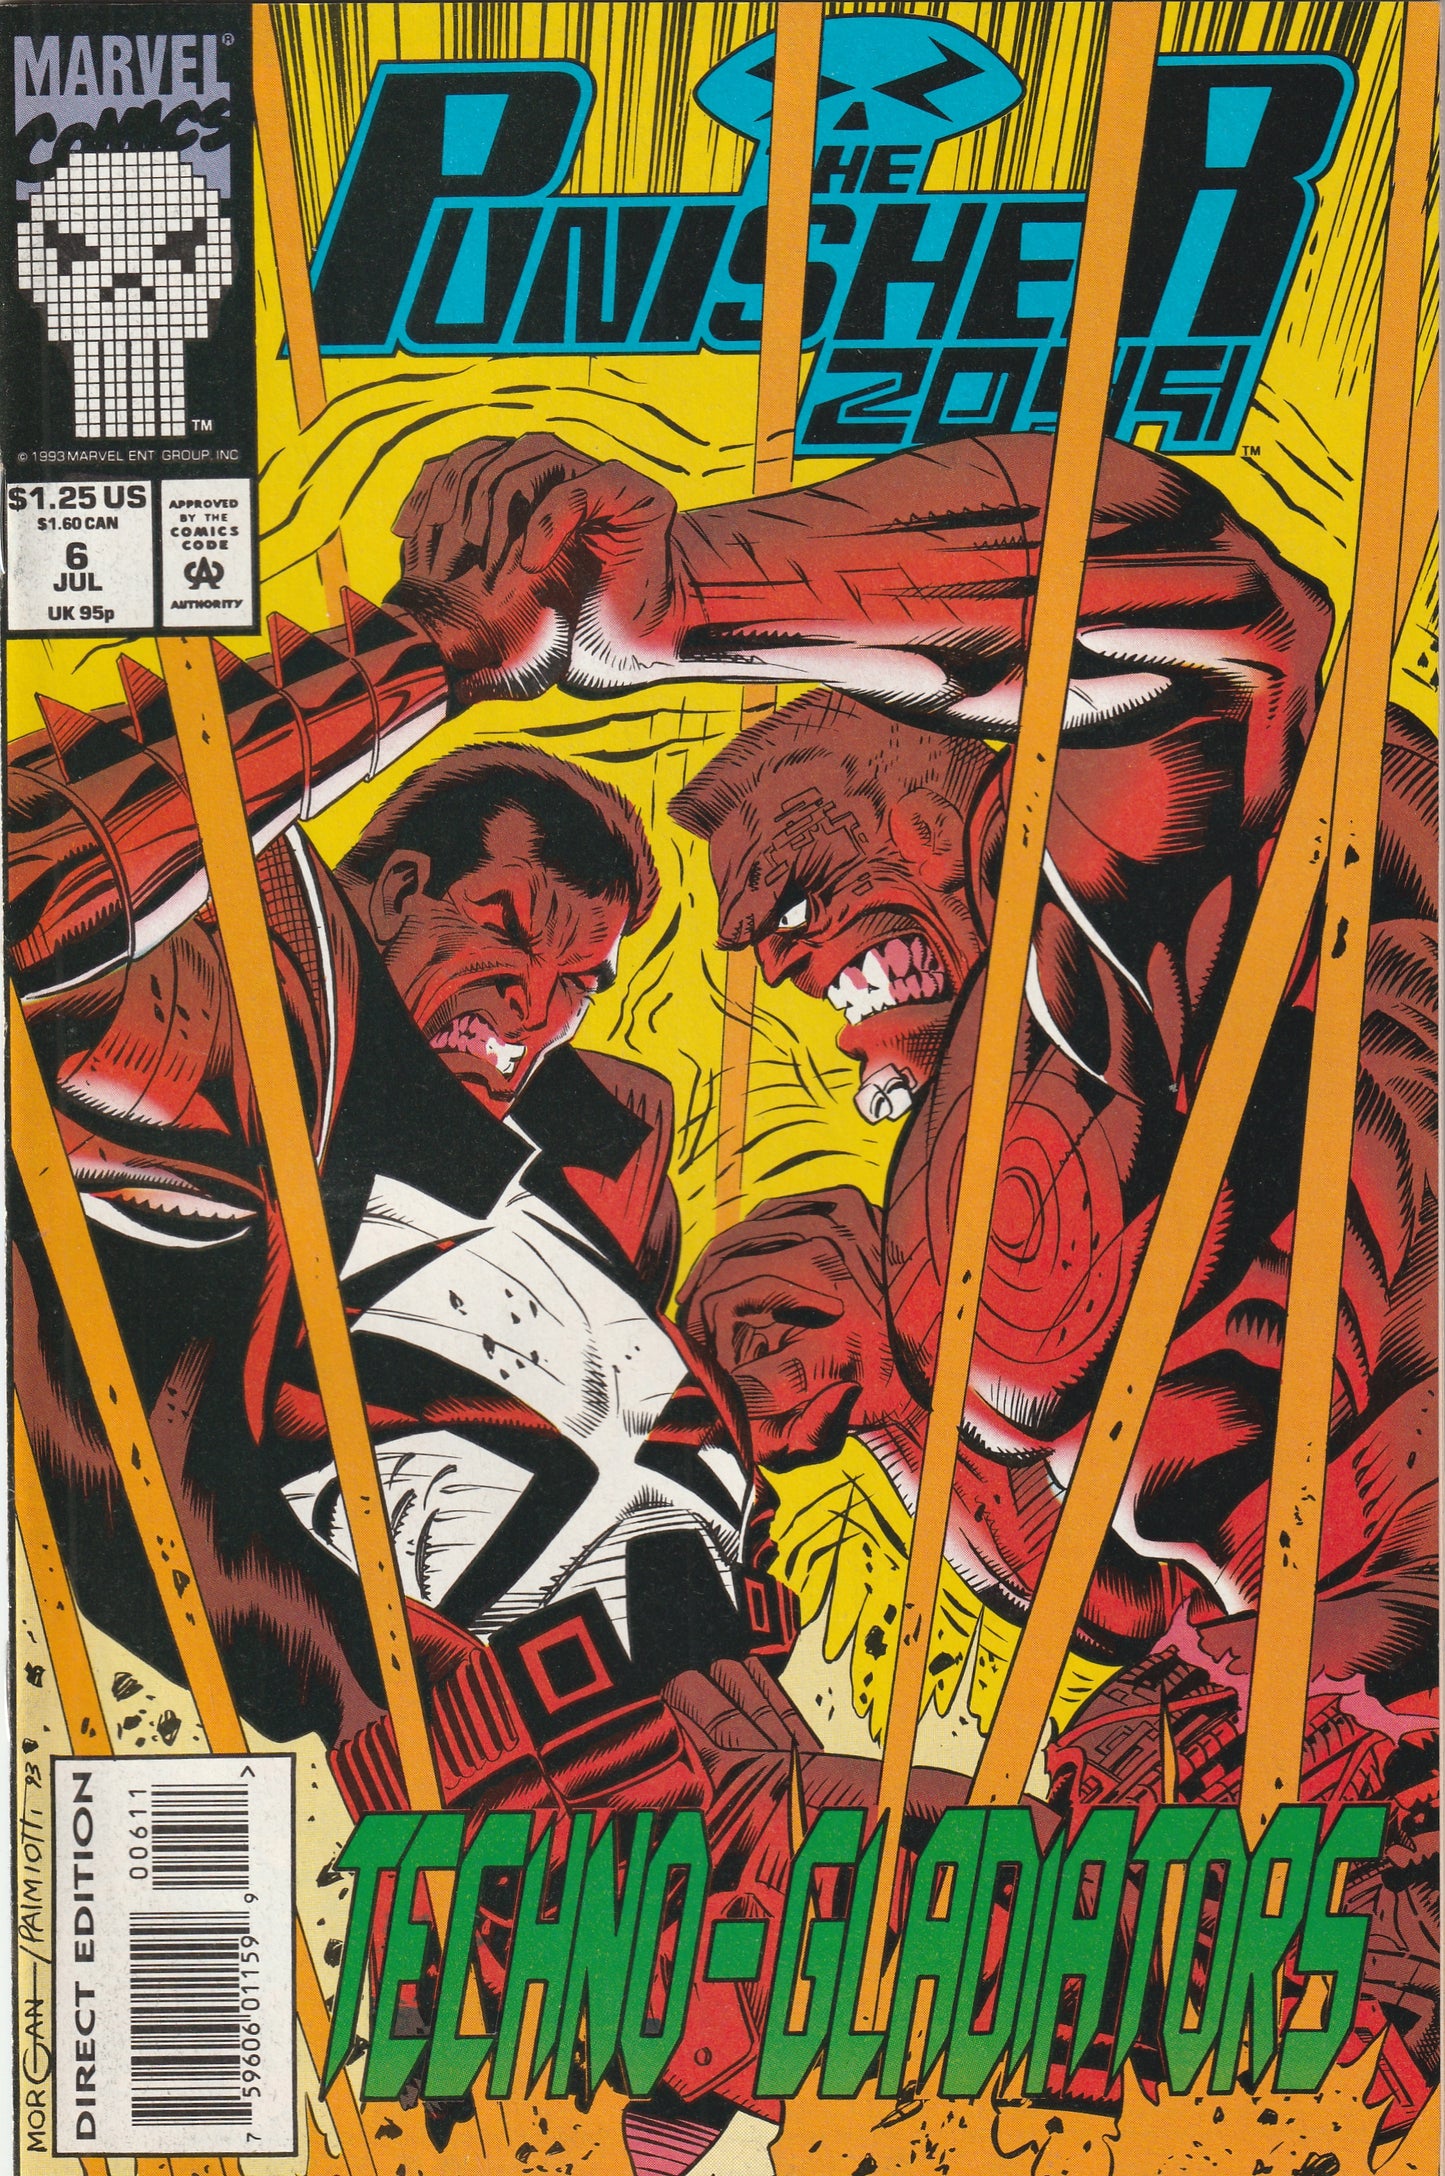 Punisher 2099 #6 (1993)